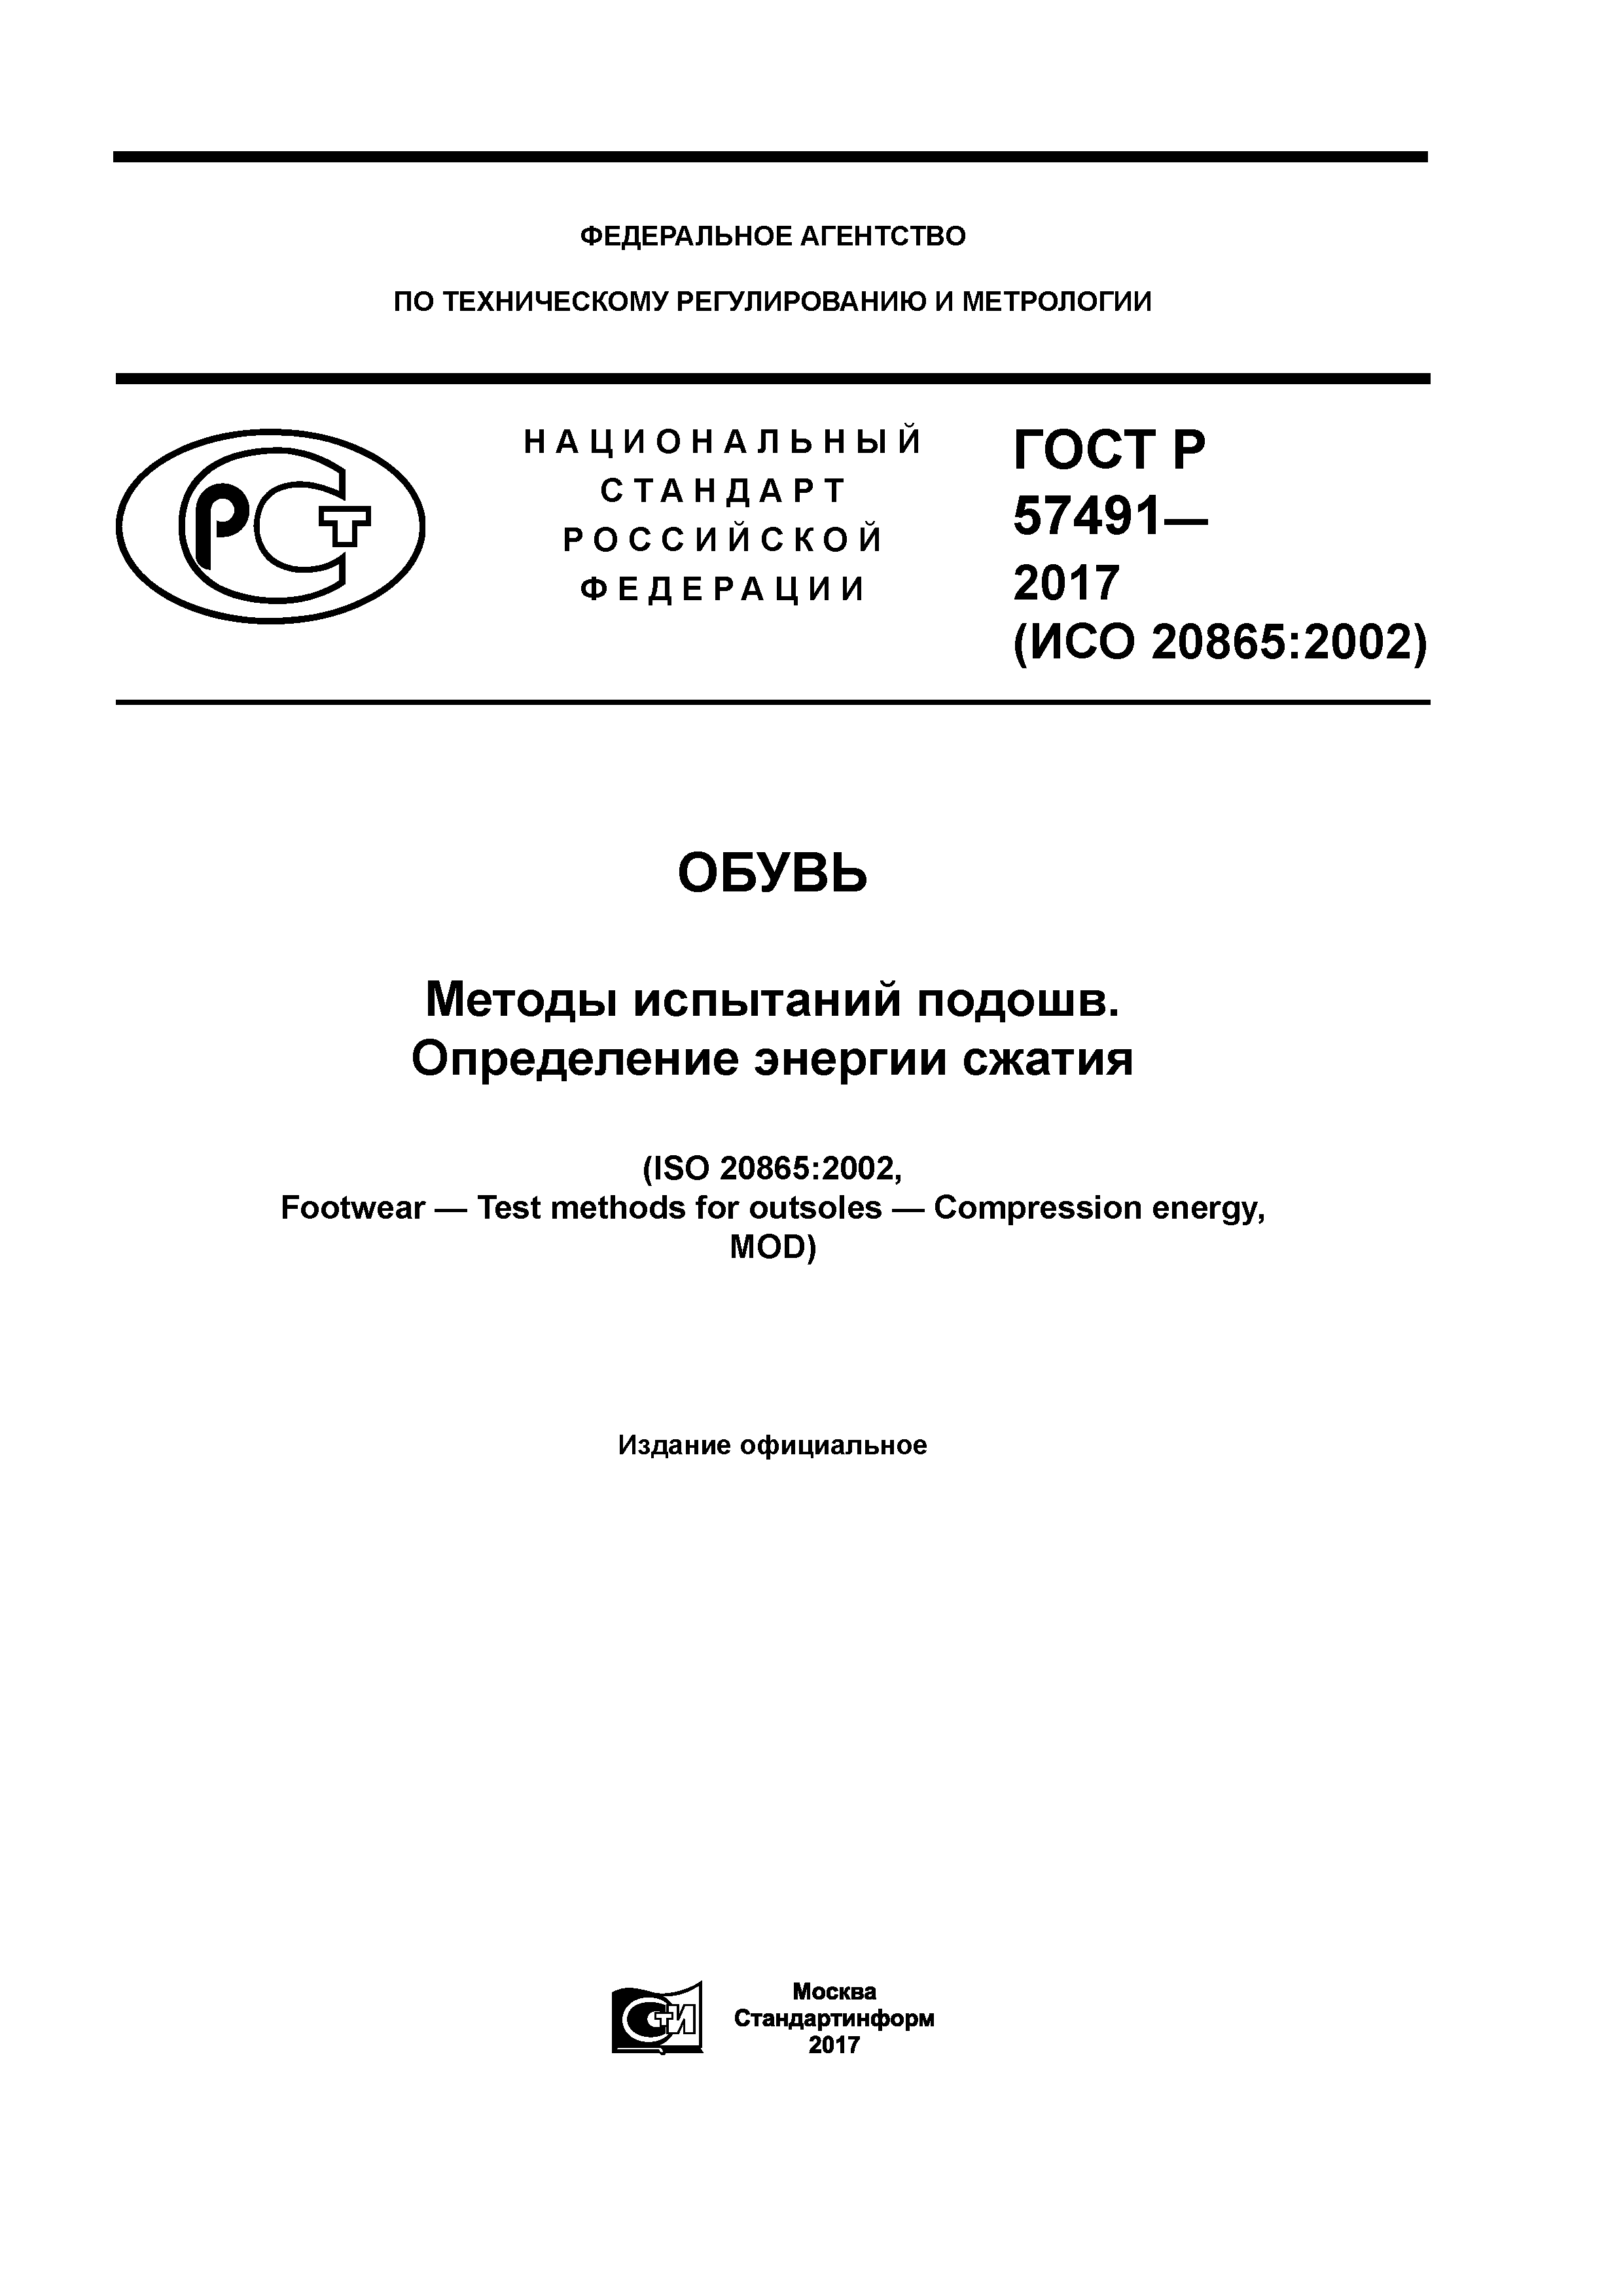 ГОСТ Р 57491-2017